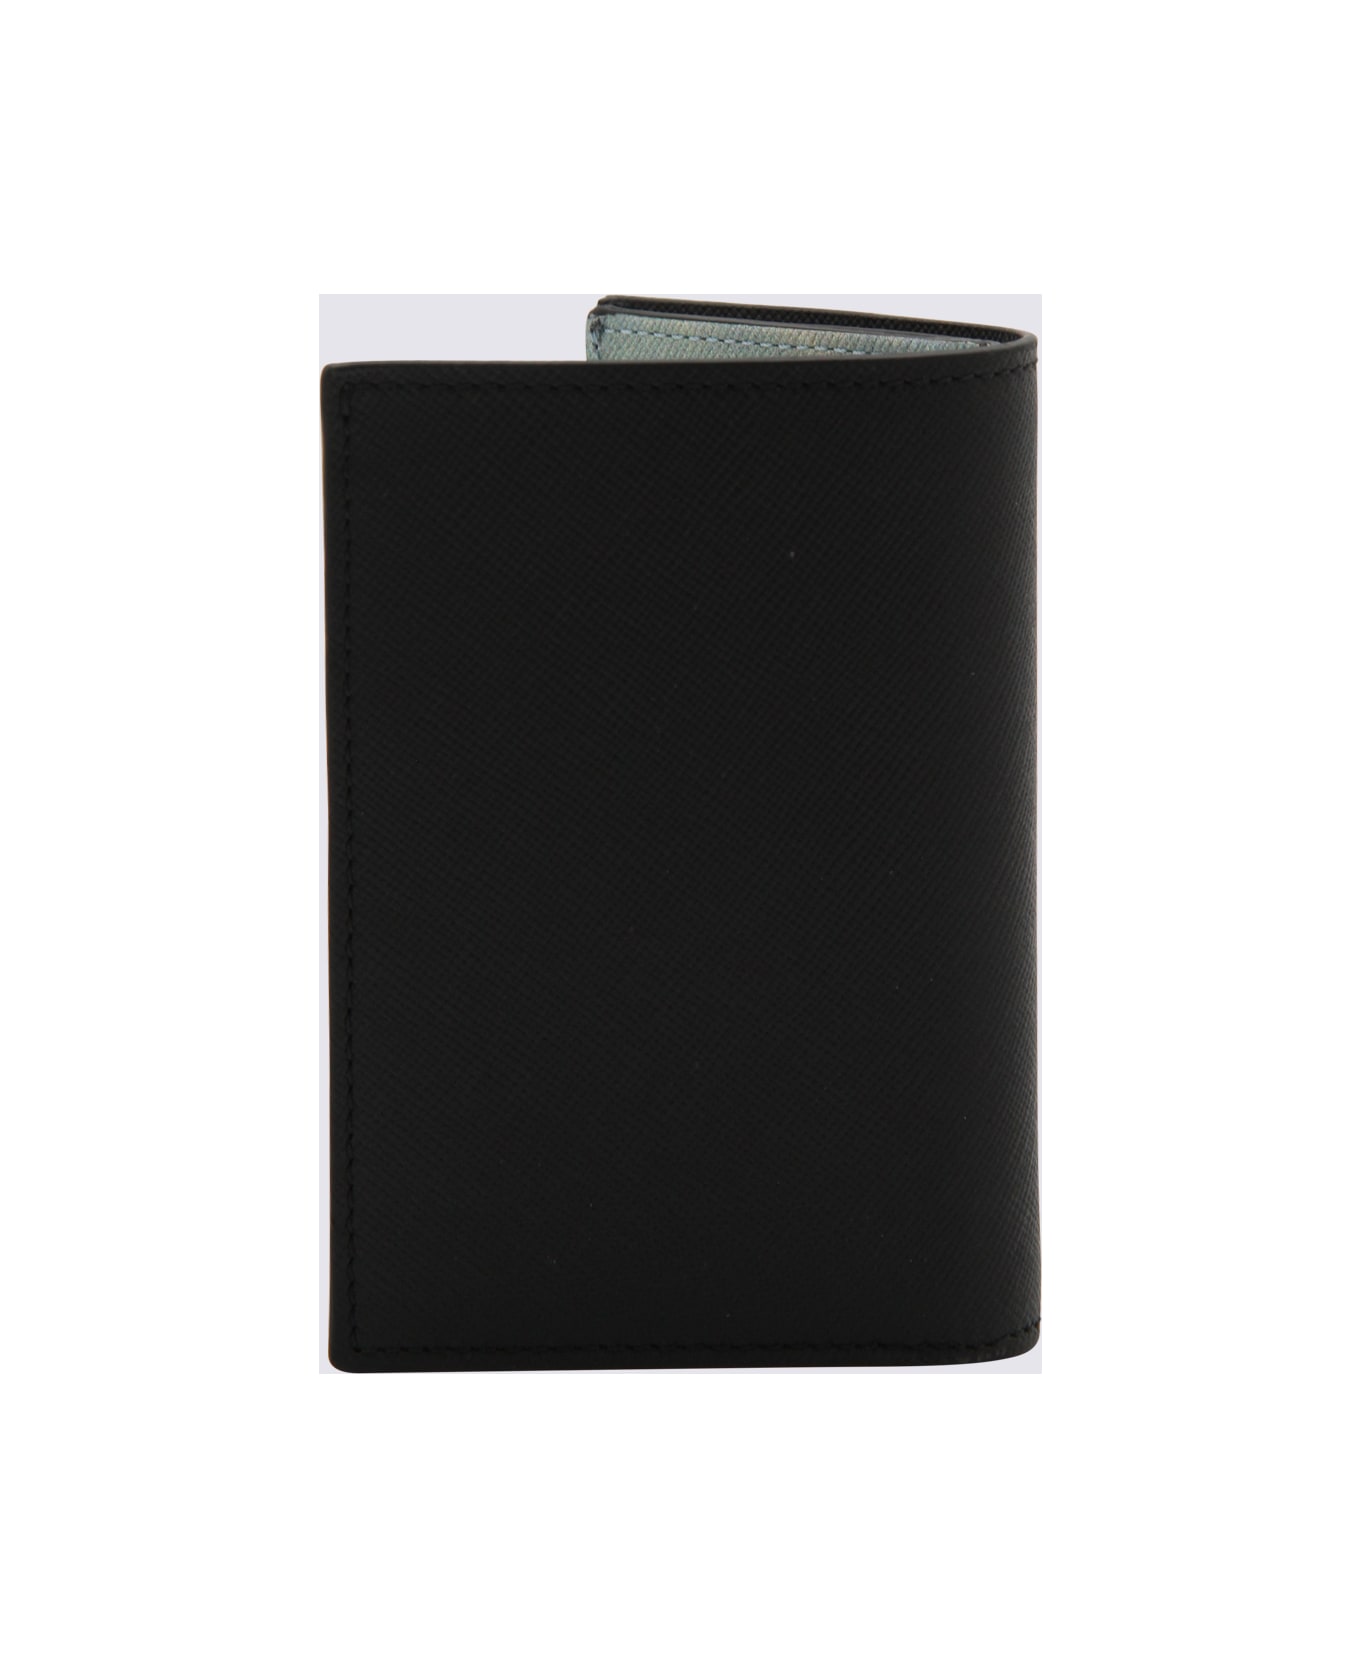 Paul Smith Black Multicolour Leather Cardholder - Nero